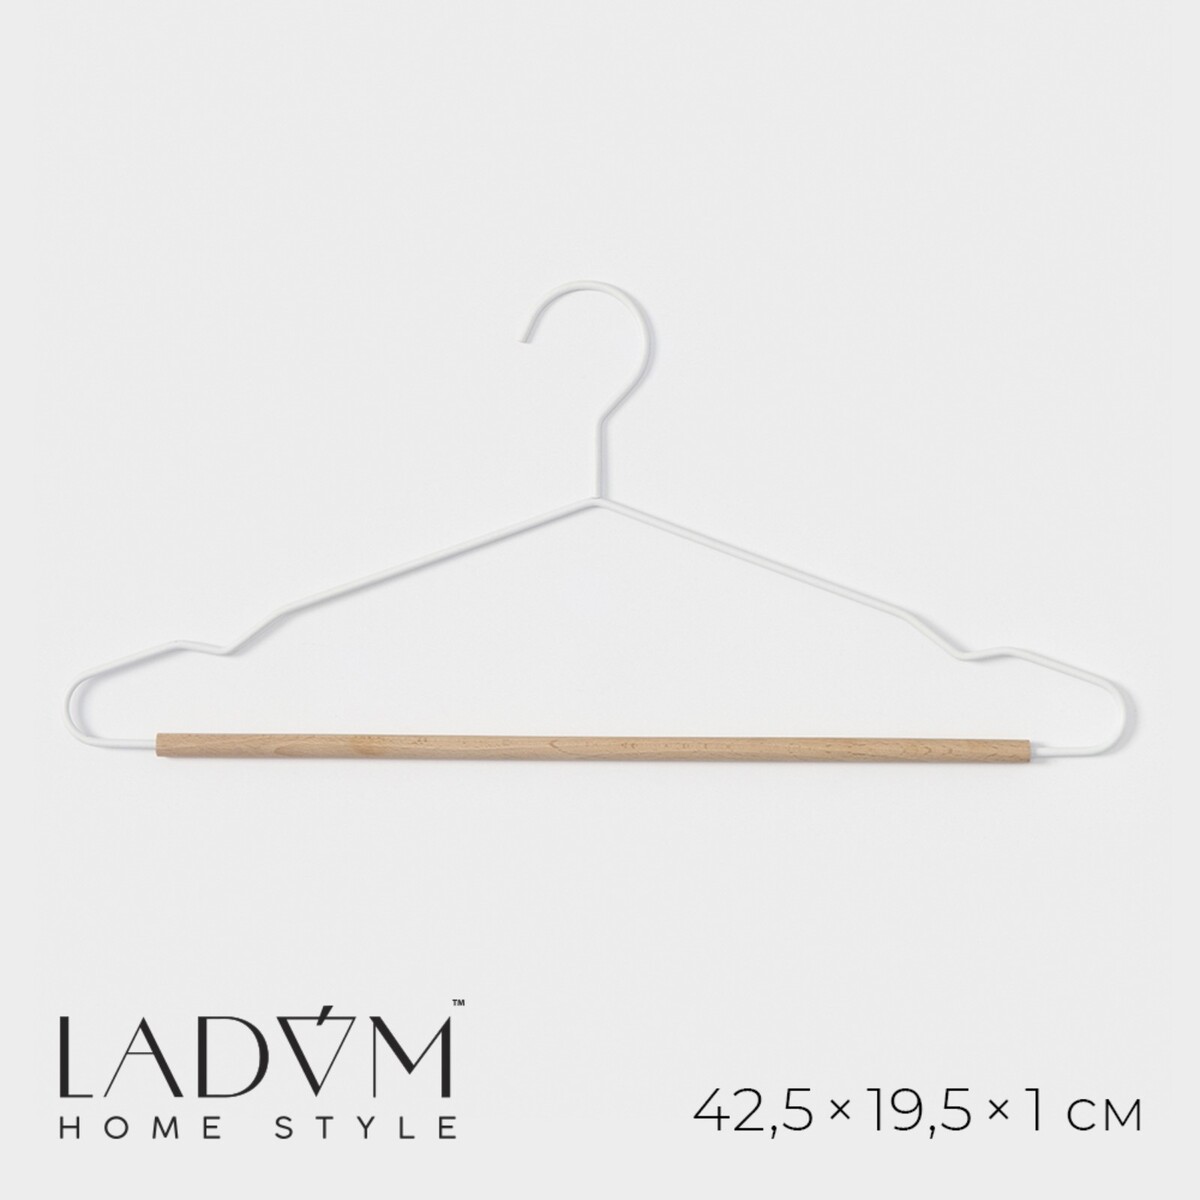 Плечики - вешалка для одежды ladо́m laconique, 42,5×19,5×1 см, цвет белый плечики вешалки для одежды ladо́m